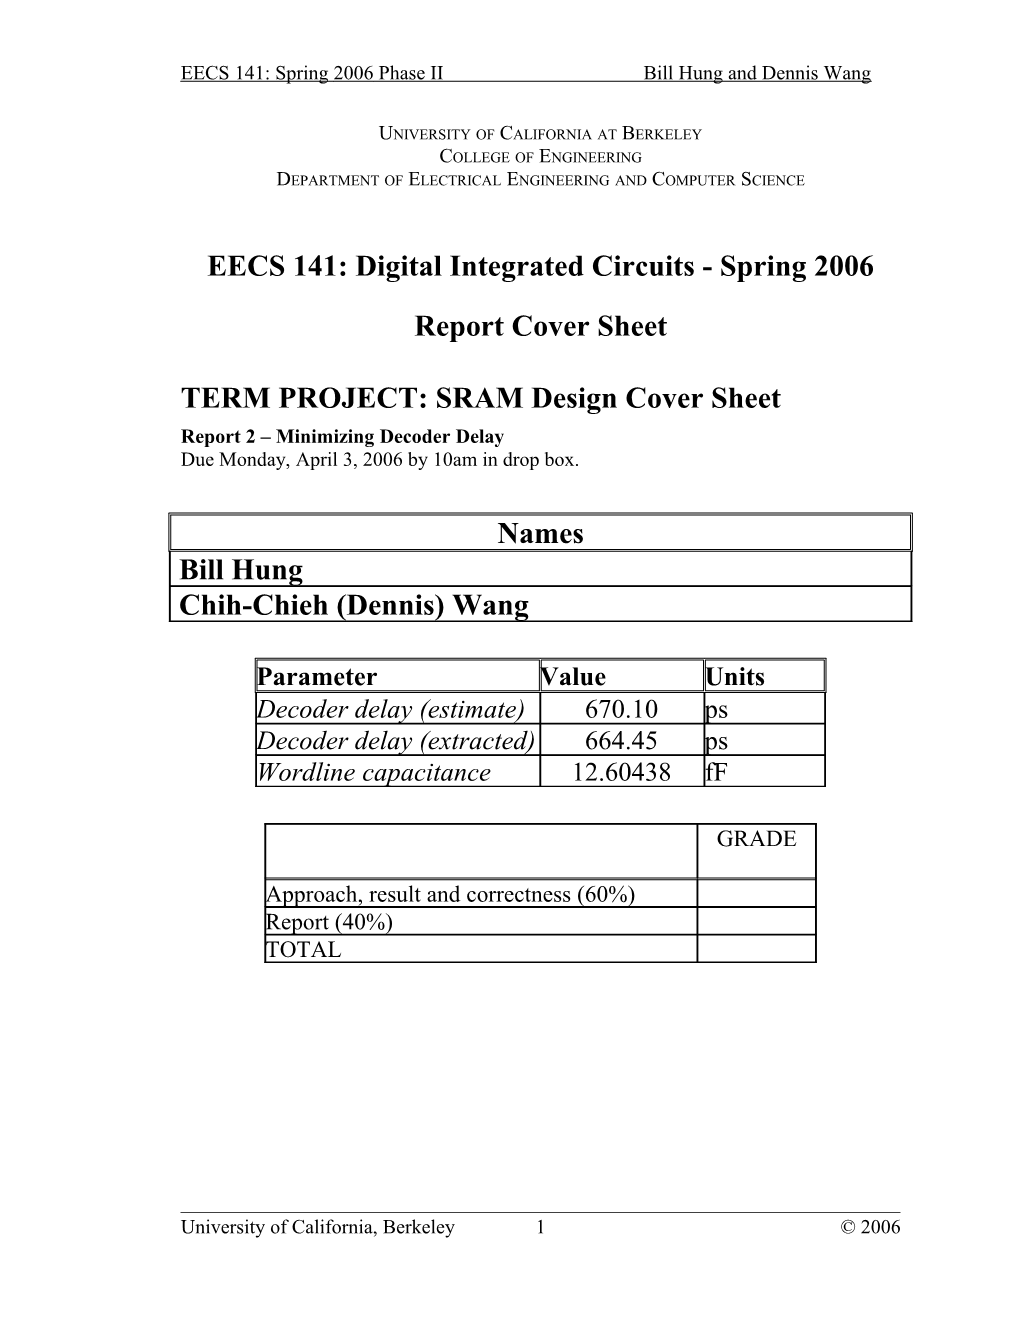 EECS 141: Digital Integrated Circuits - Spring 1998